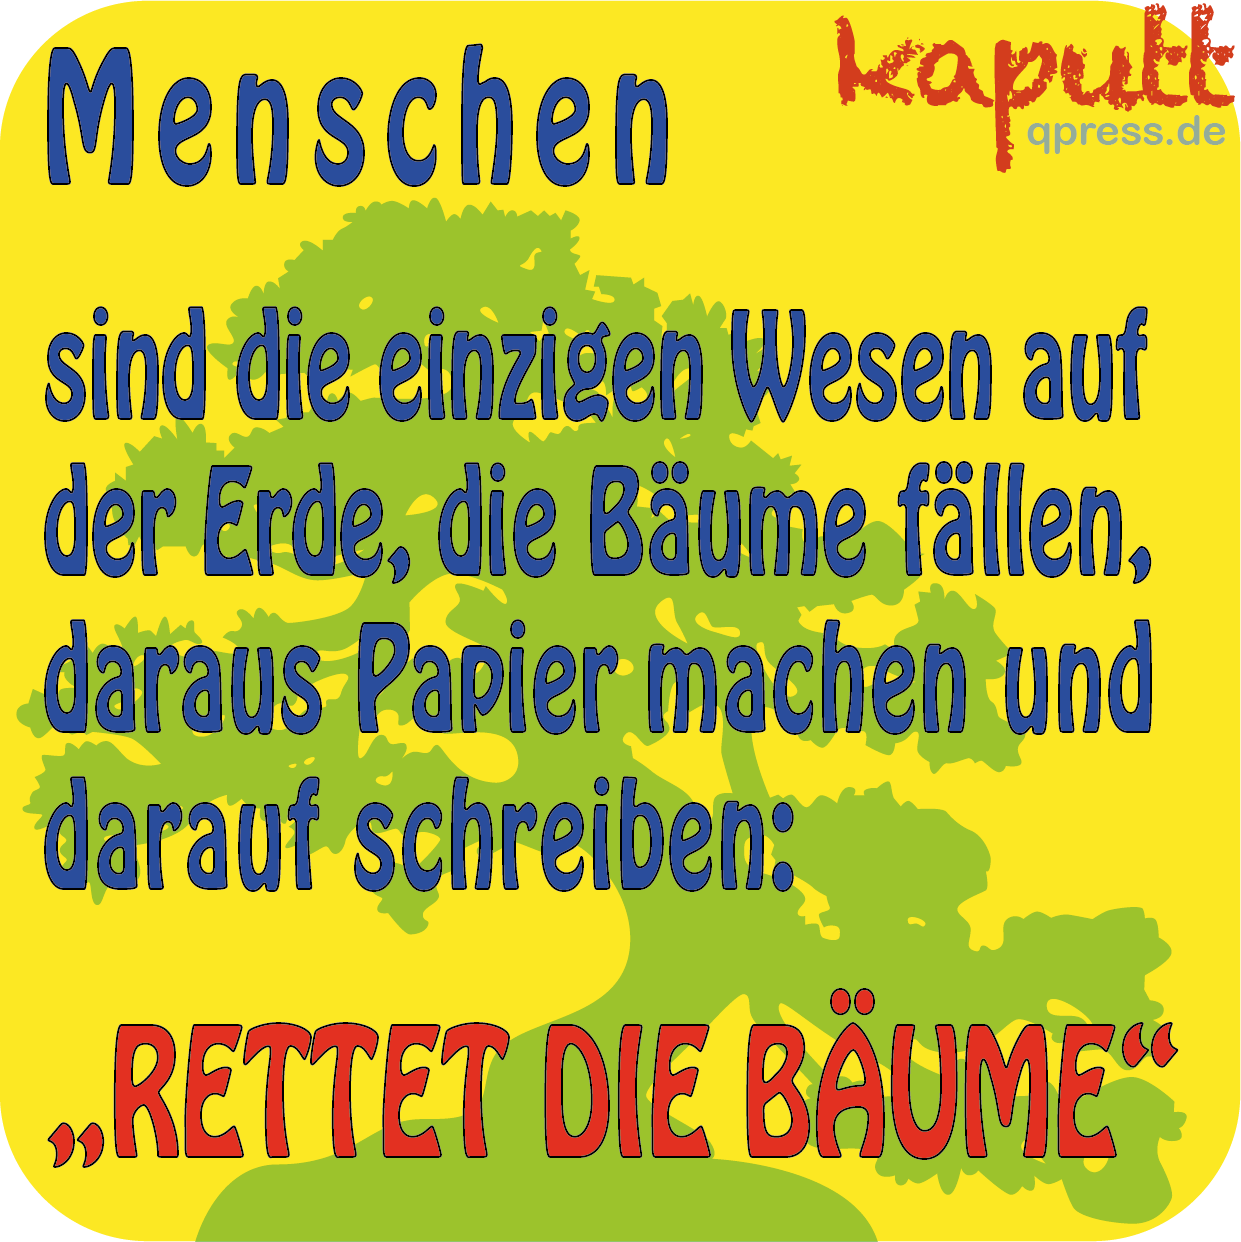 kaputt_Rettet_die_Baeume_schild_Demo_Widersinn_qpress